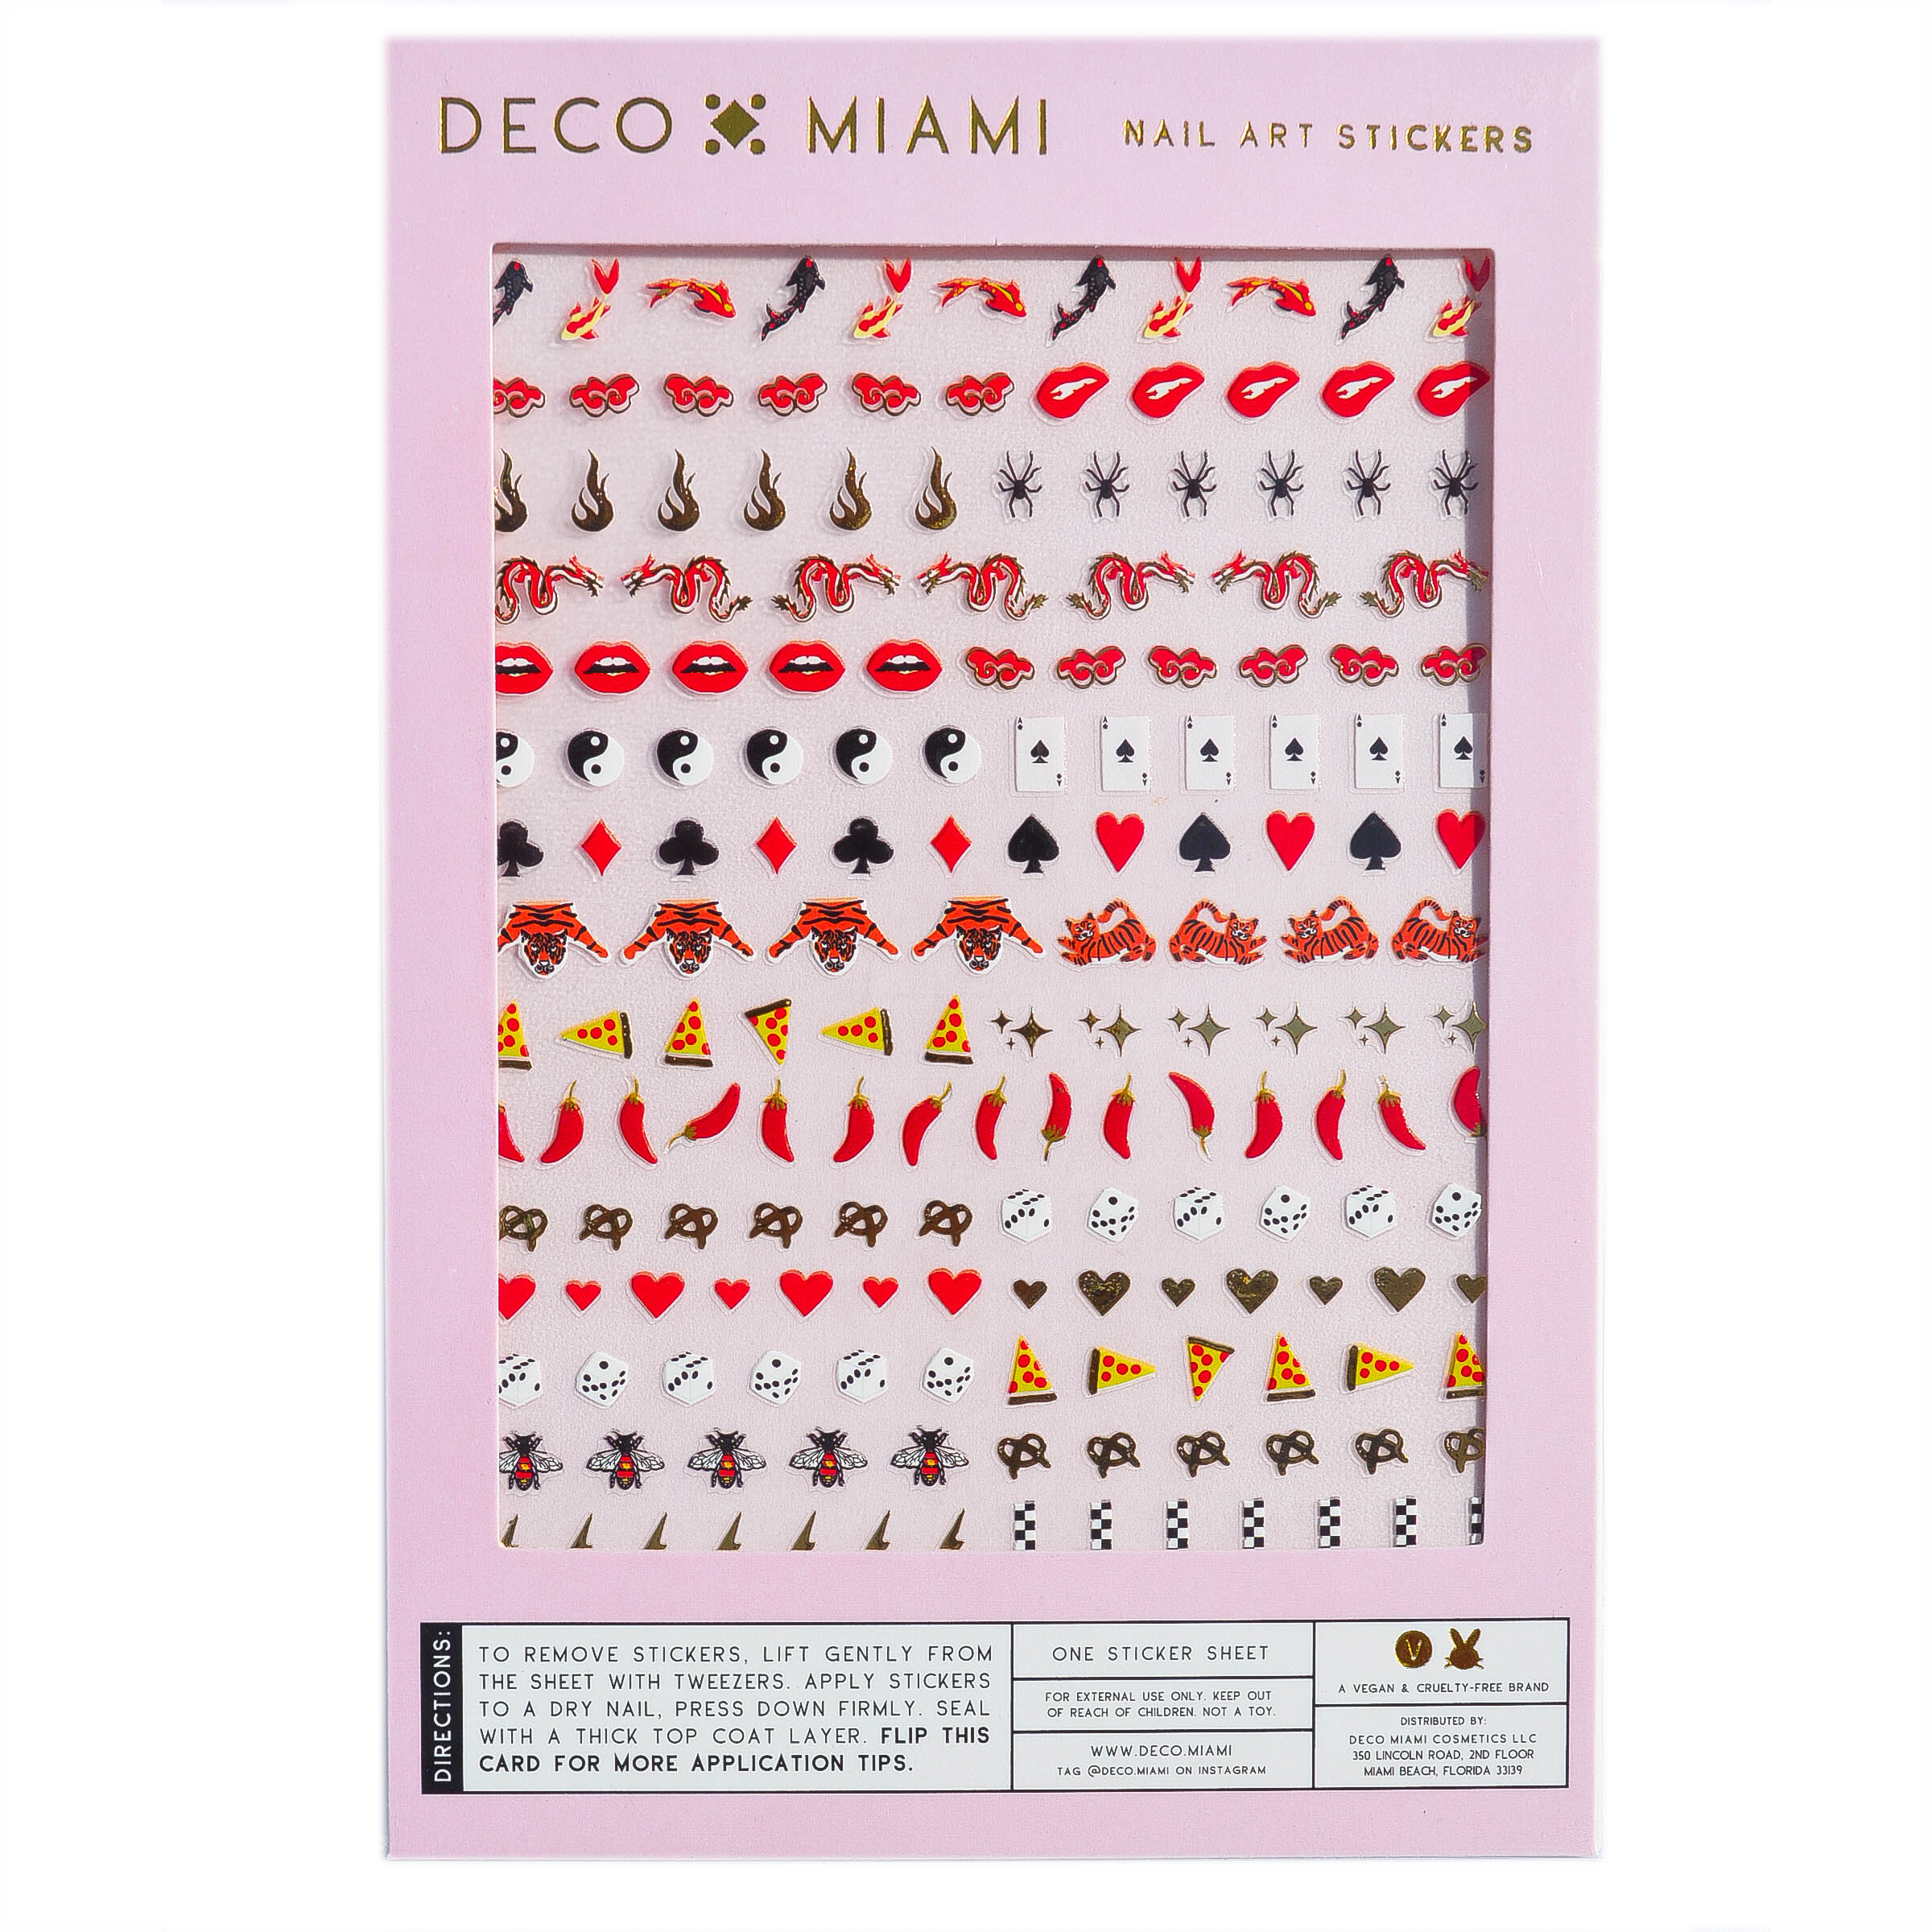 Deco Miami Nail Art Stickers at Friends NYC in Brooklyn